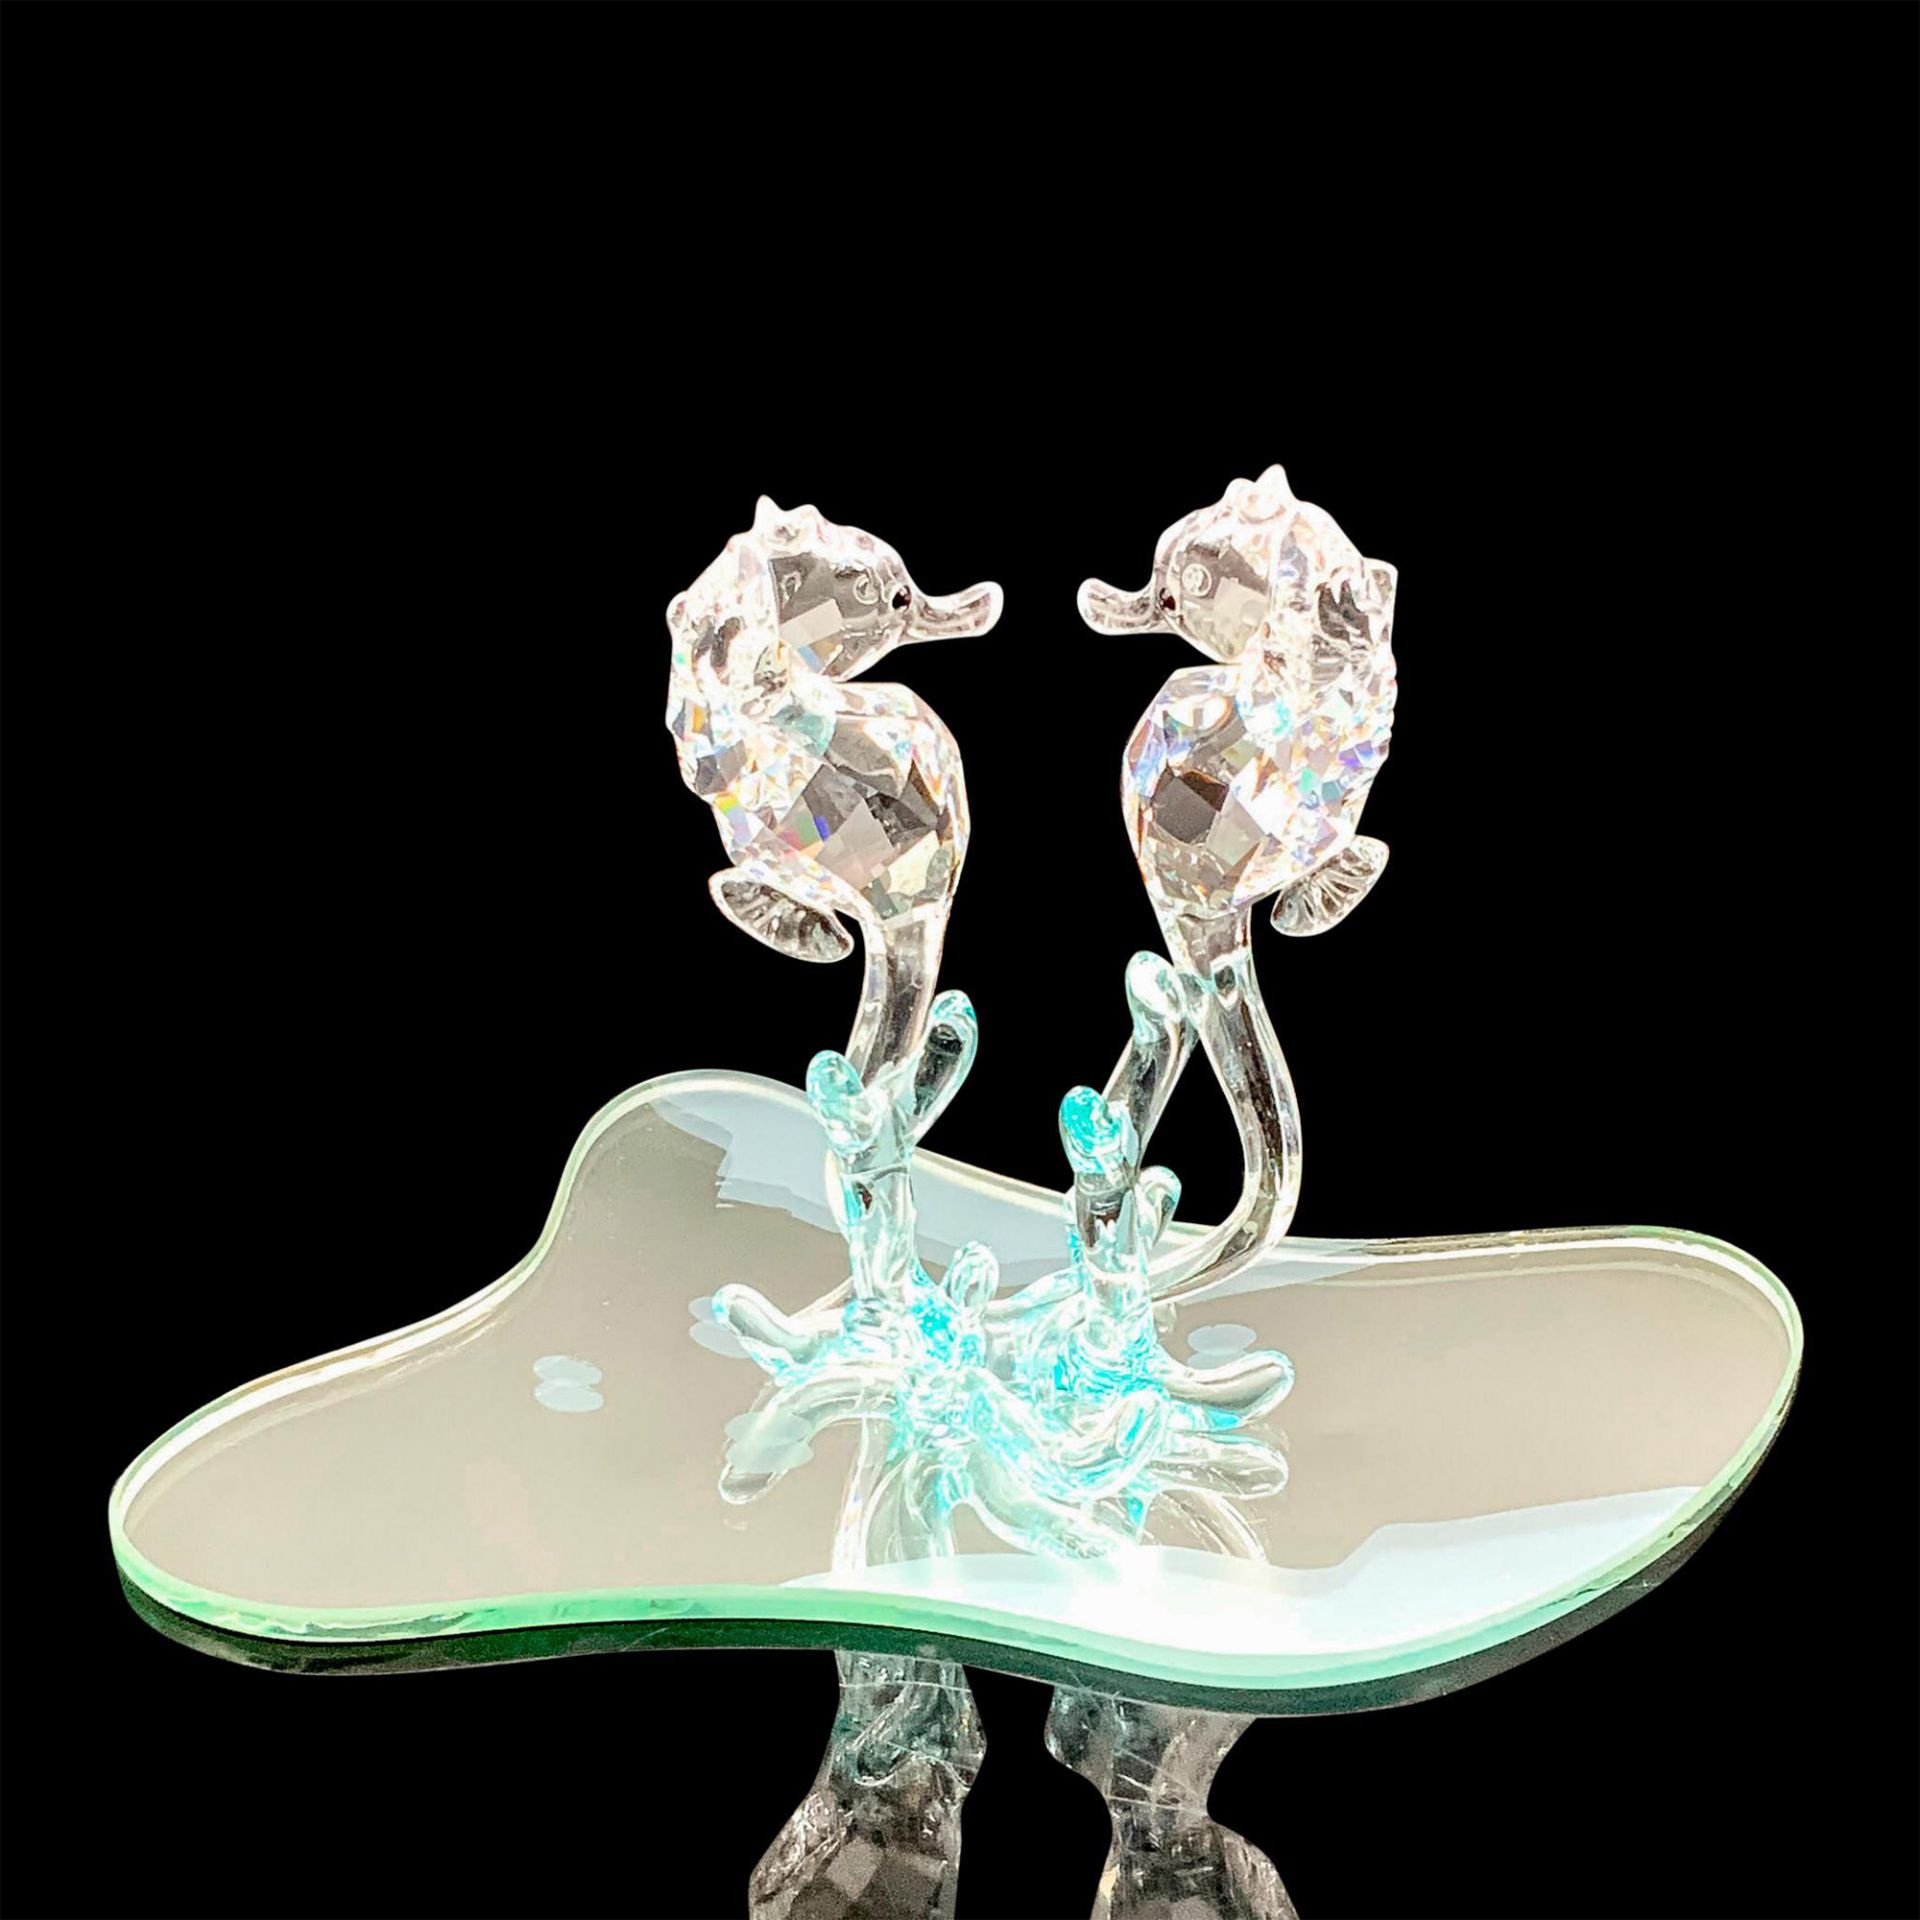 Swarovski Crystal Figurine + Base, Seahorses - Image 2 of 4